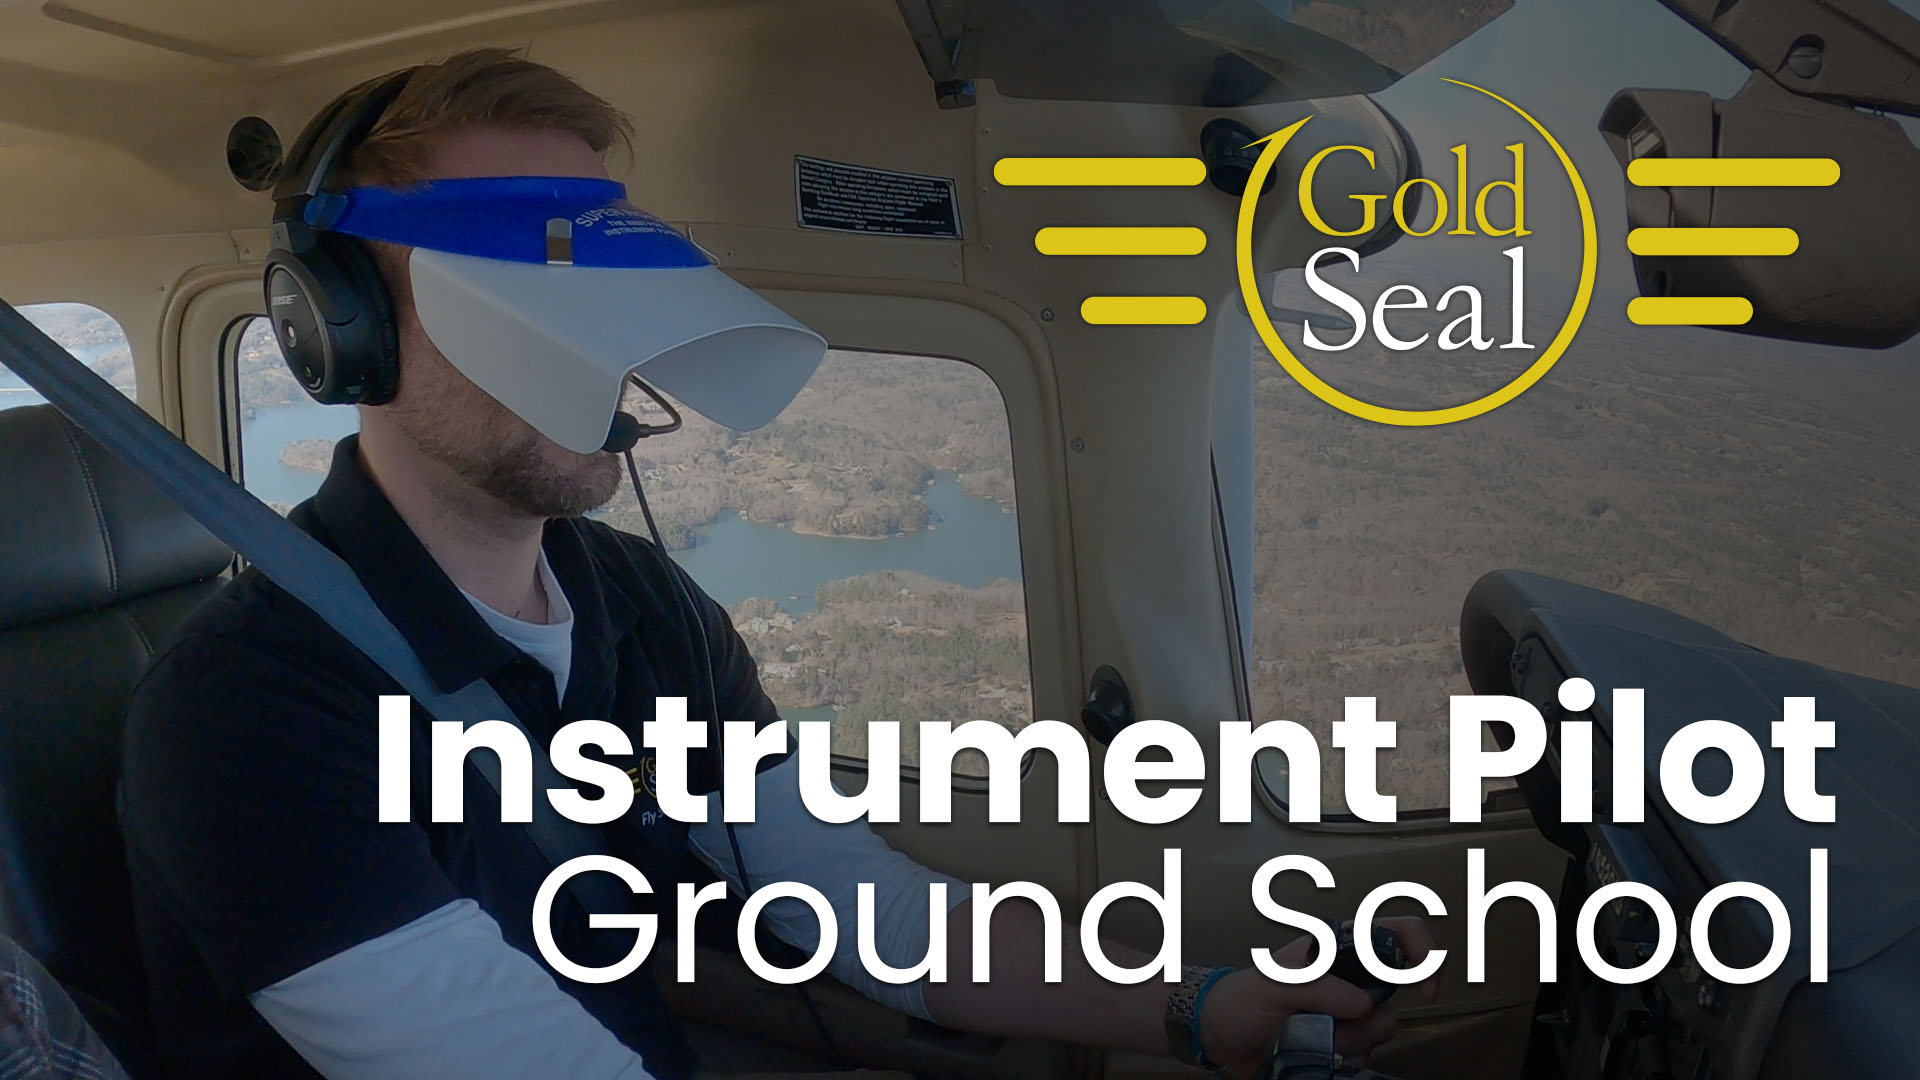 Gold Seal Instrument Pilot Ground School